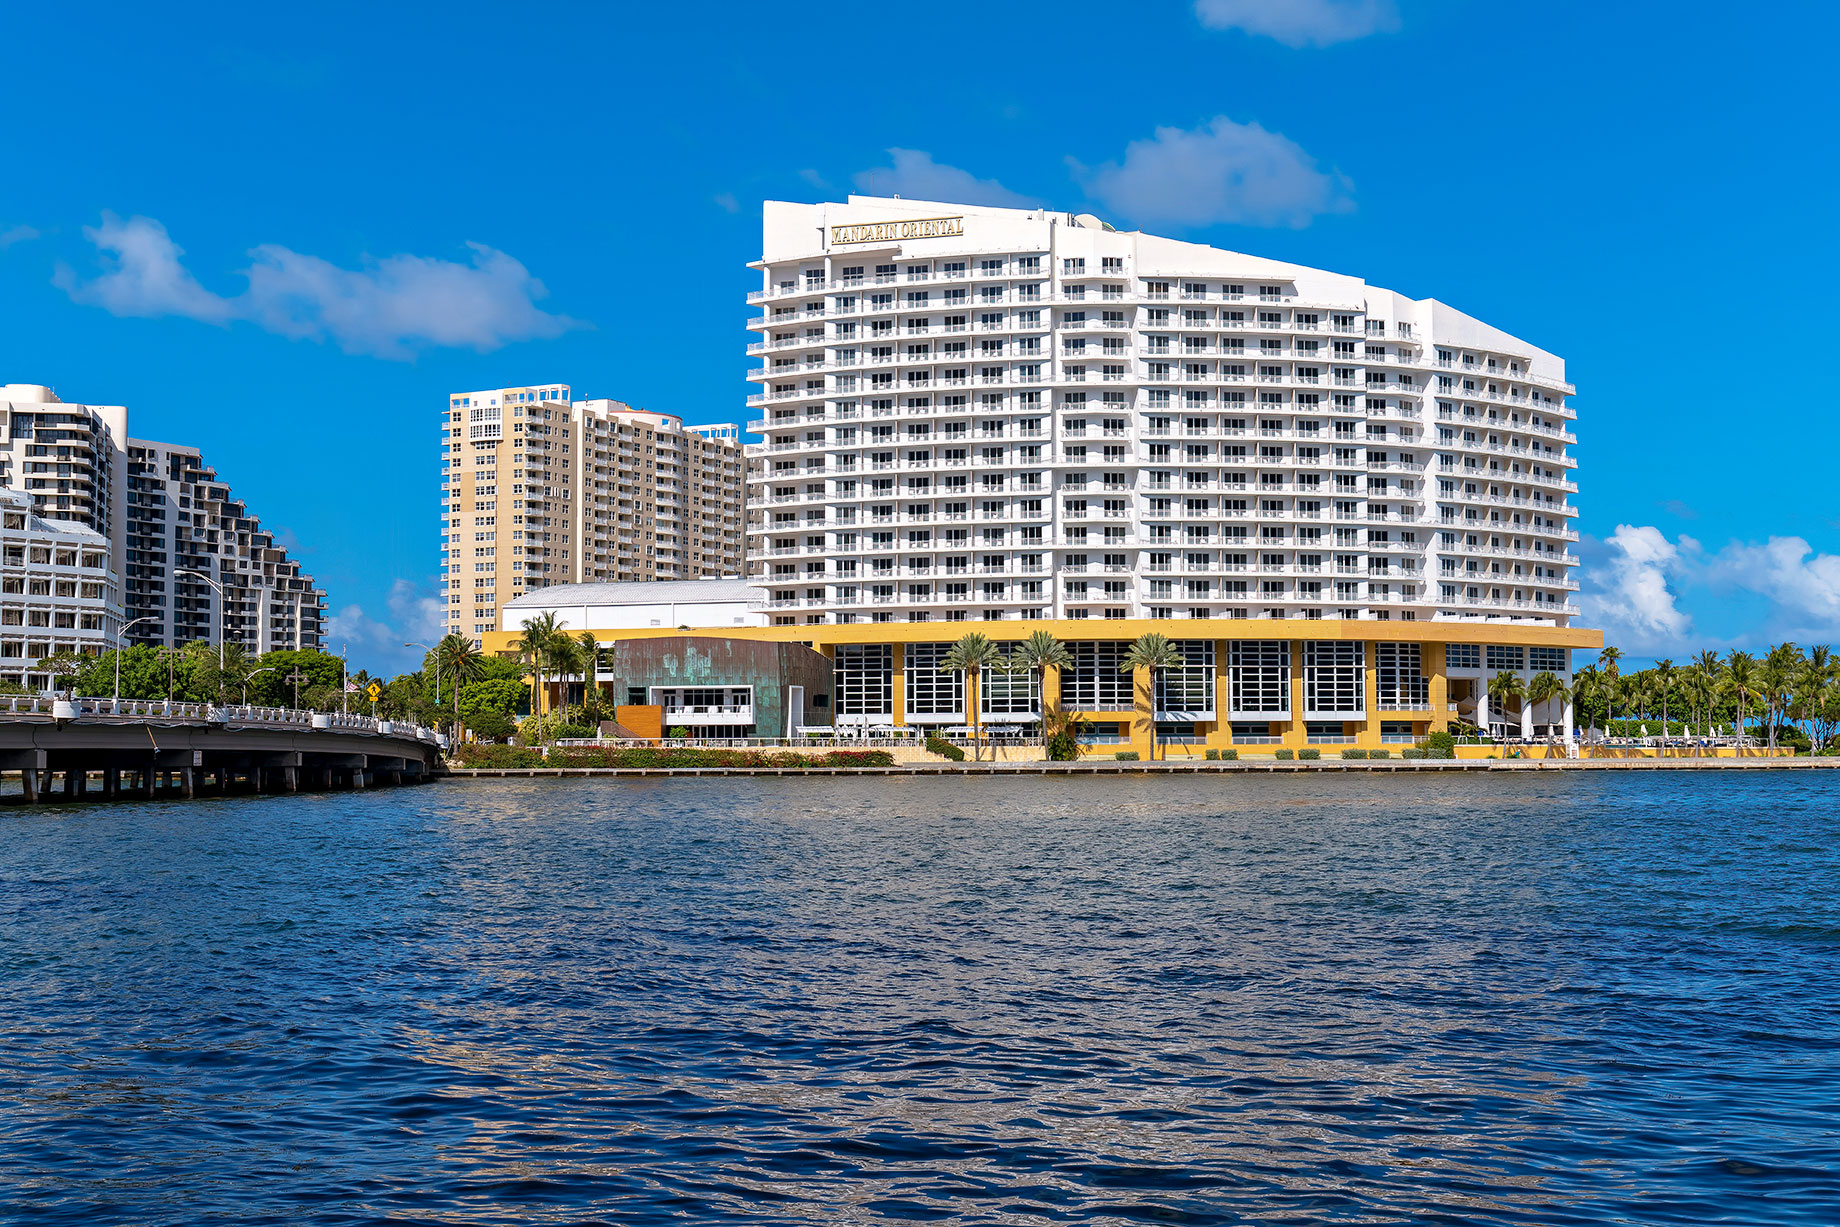 Mandarin Oriental Hotel Miami, Florida, USA